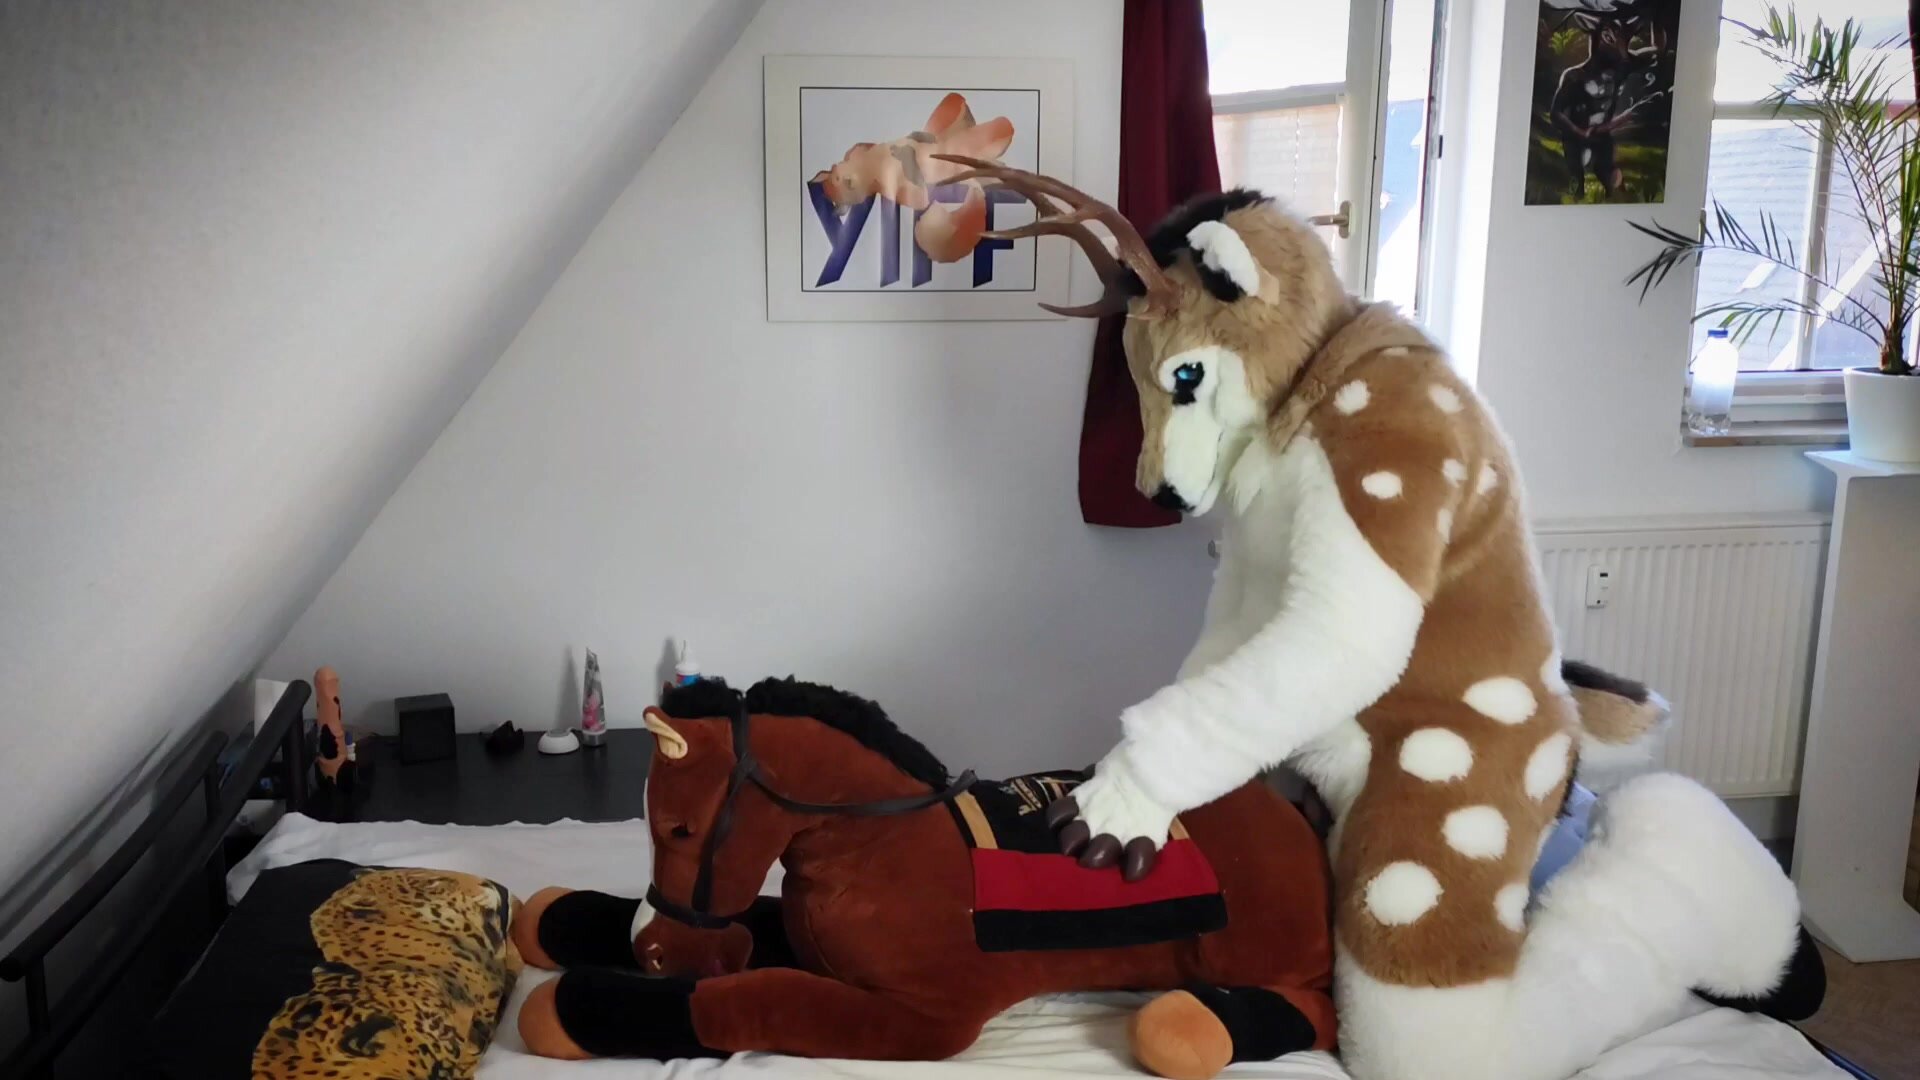 Deer fursuiter pissing and cumming on plush horse